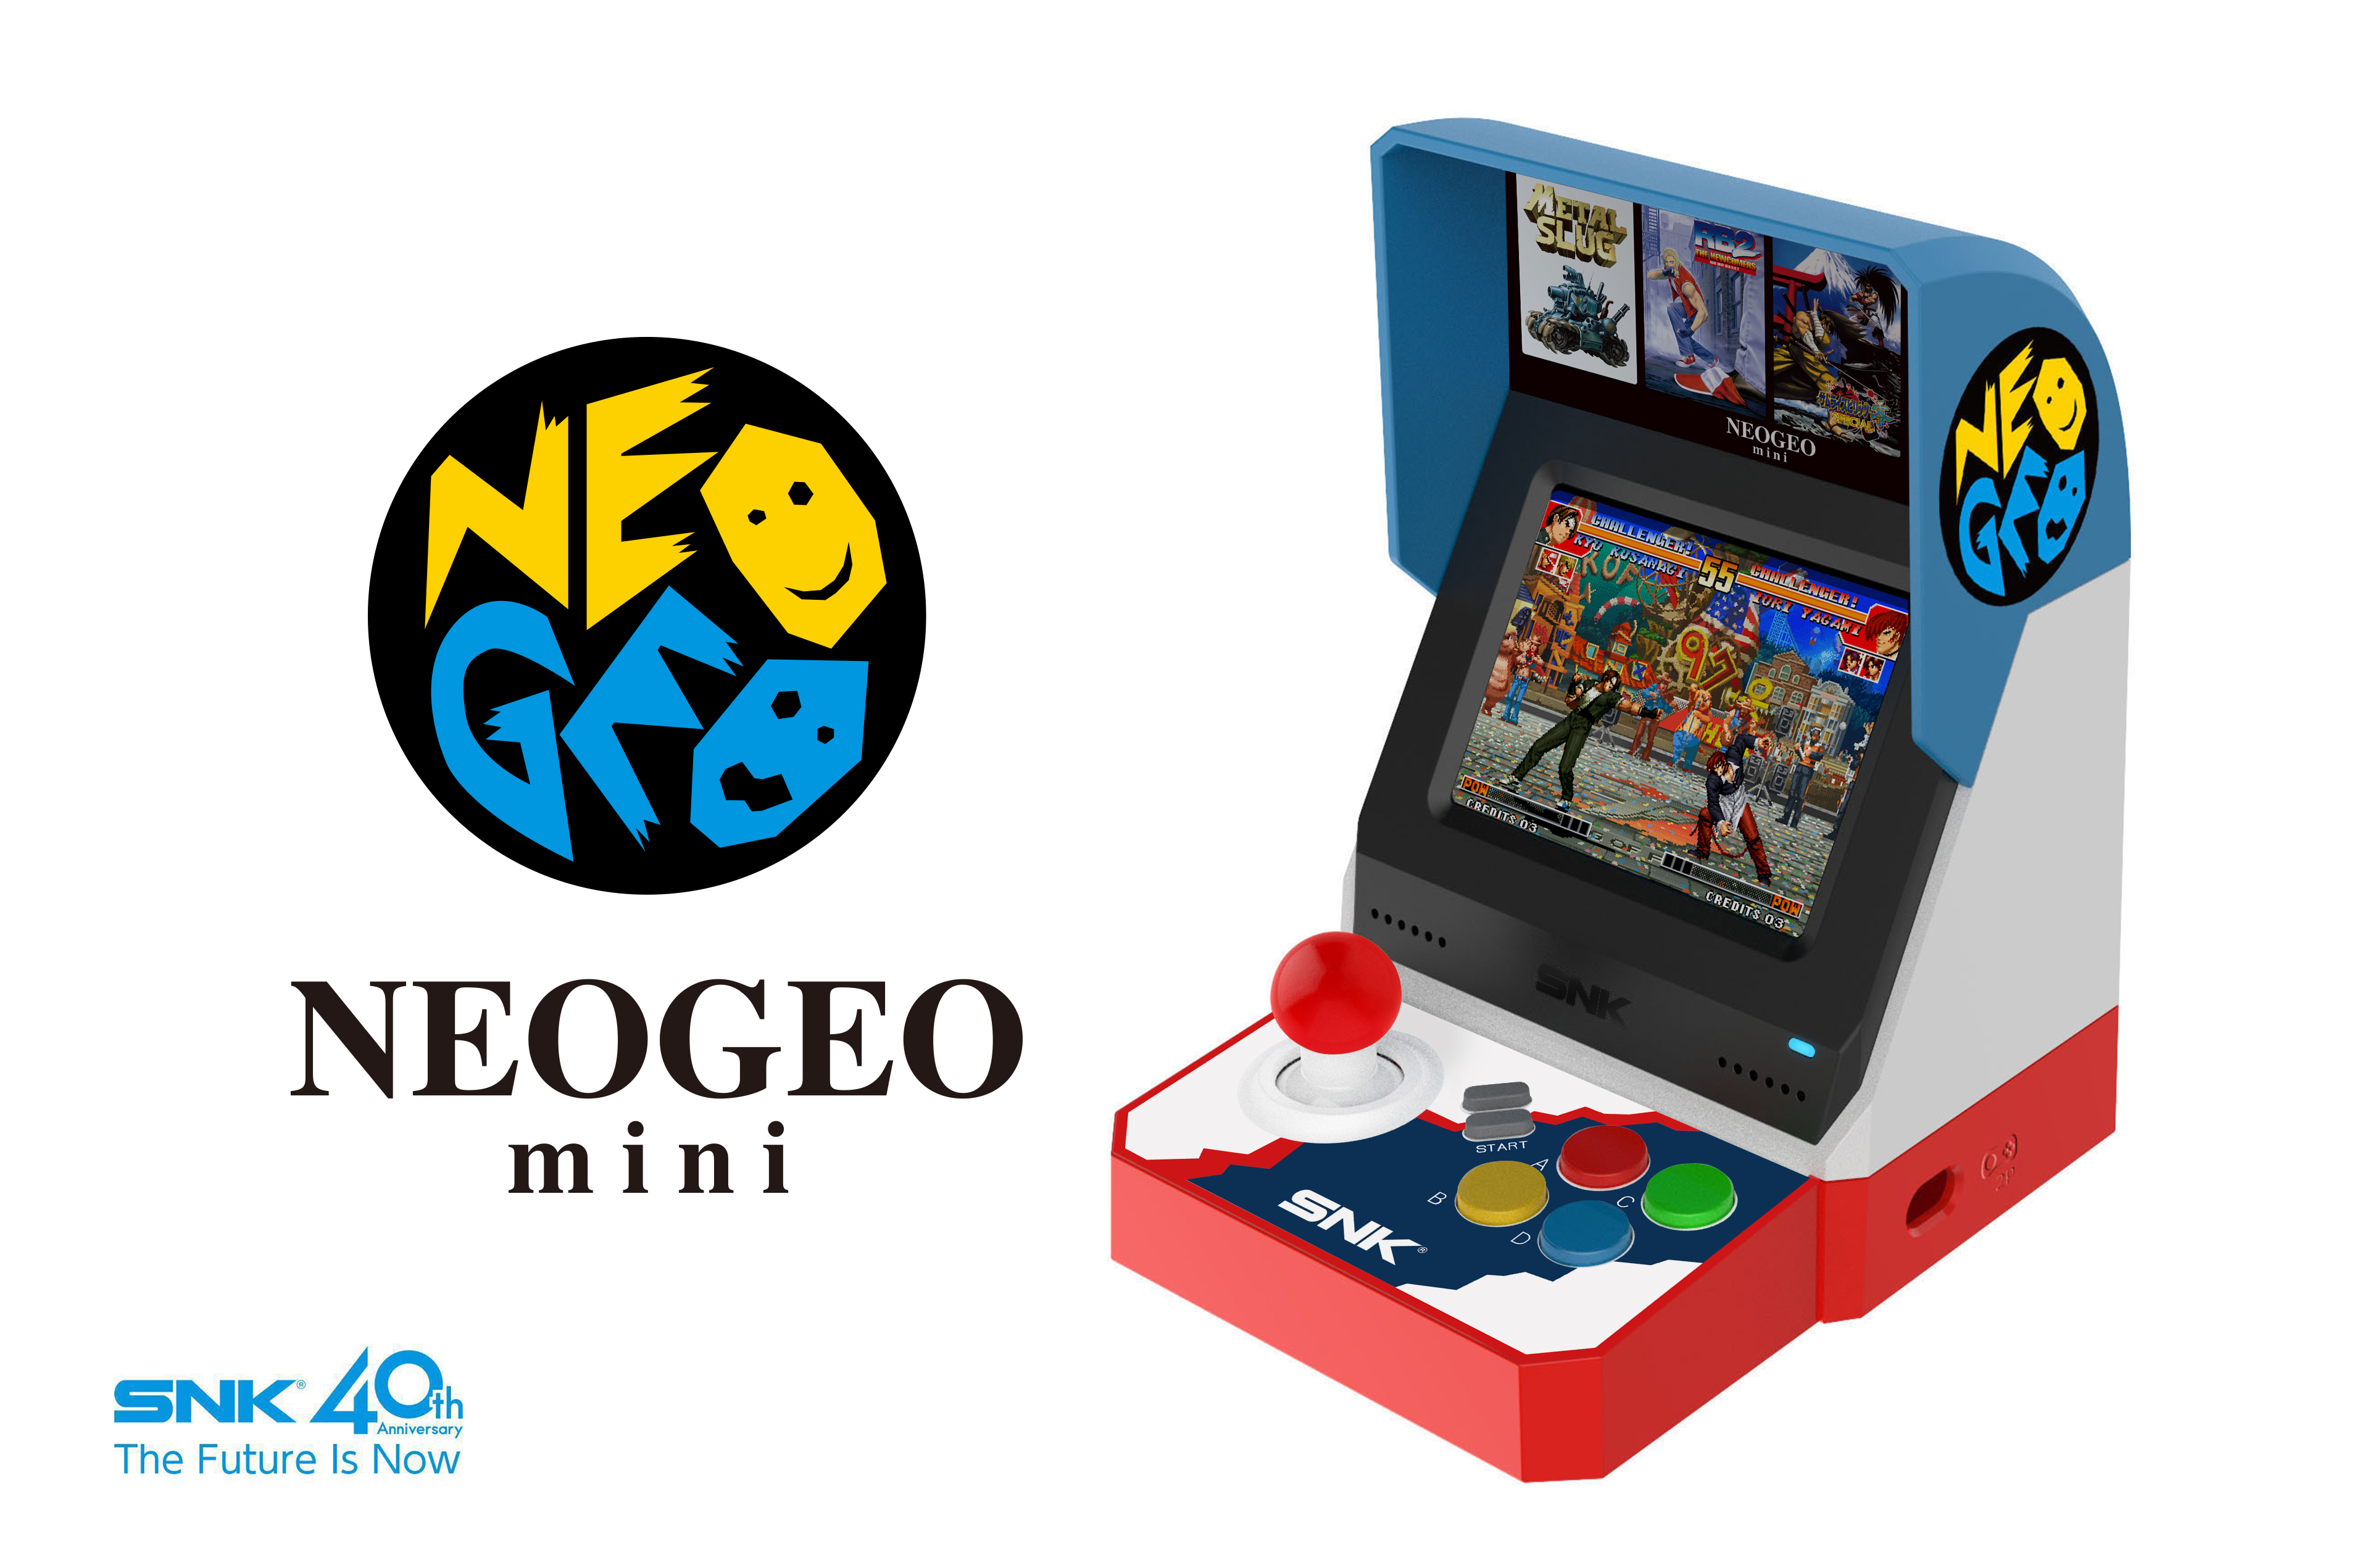 SNKブランド40周年を記念したゲーム機「NEOGEO mini」を発表！「NEOGEO